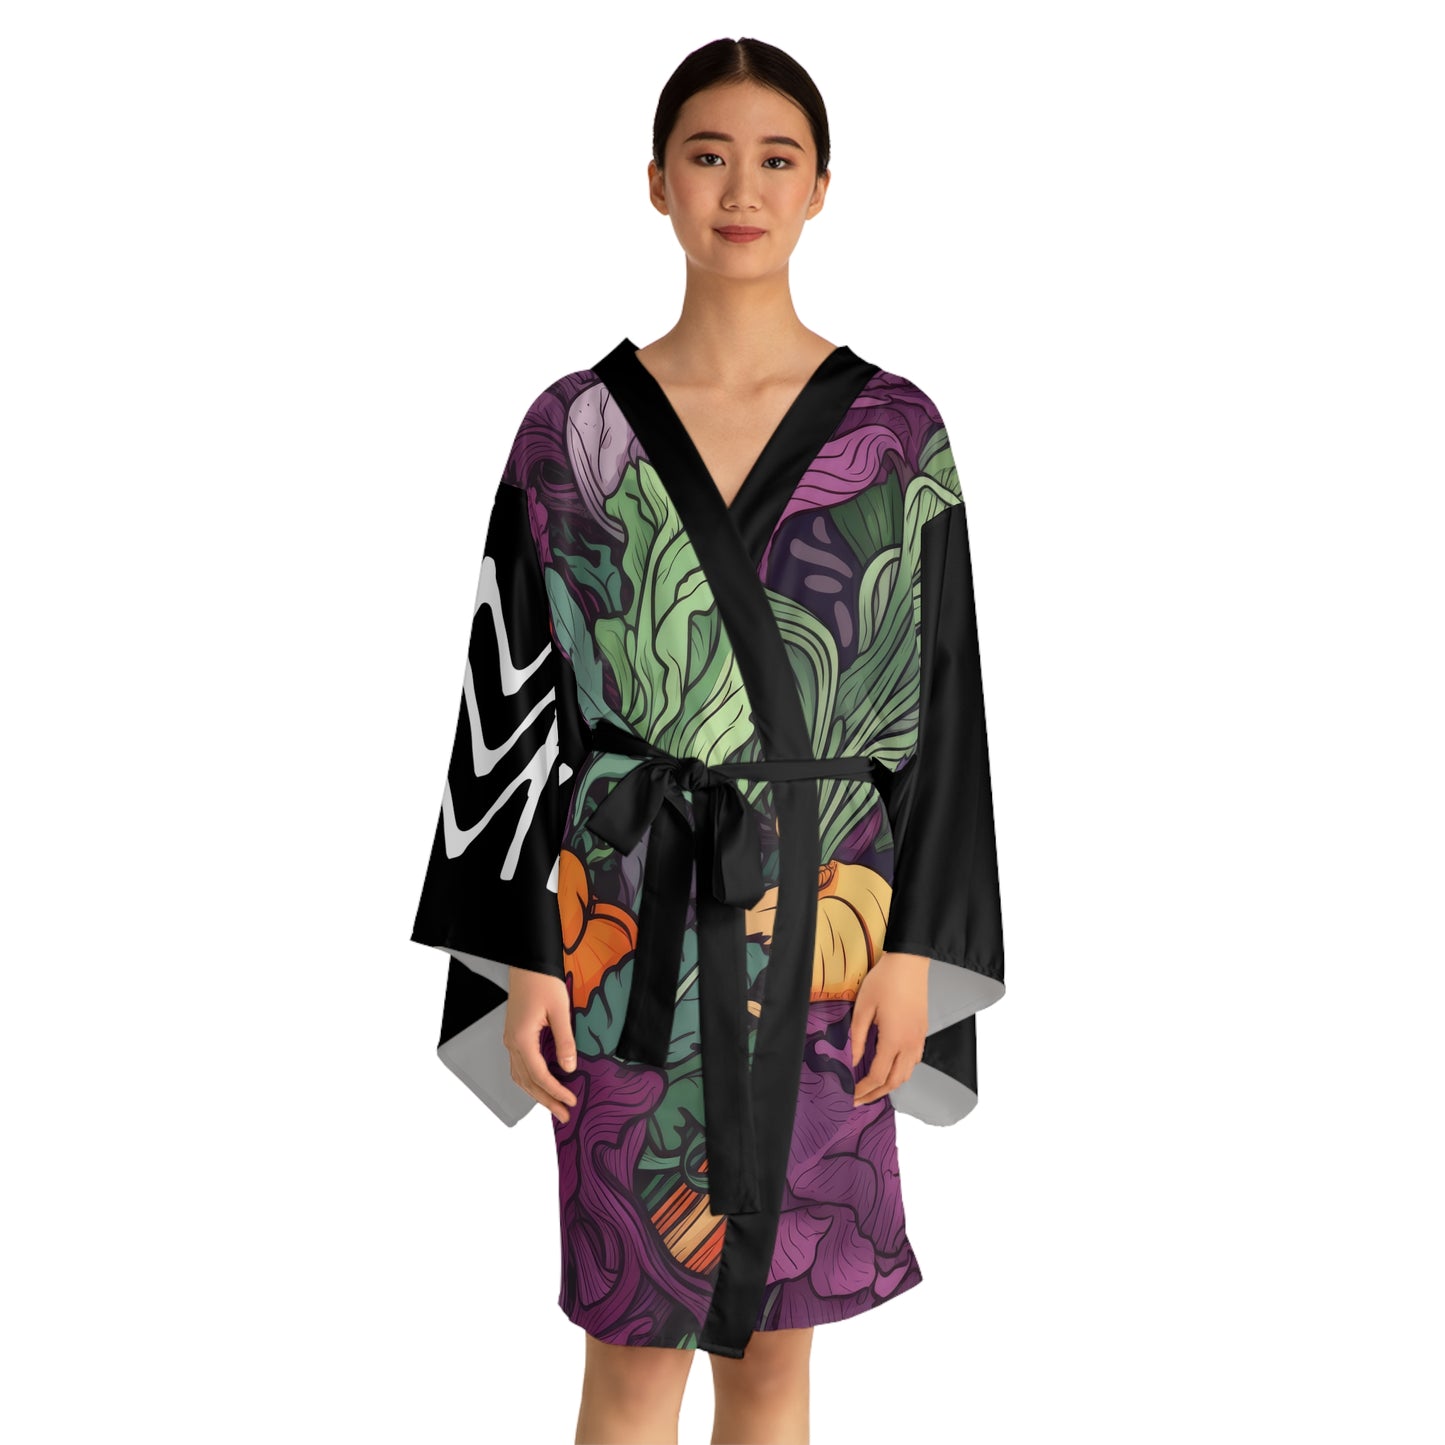 Kimono style dresses Vegetables Black 